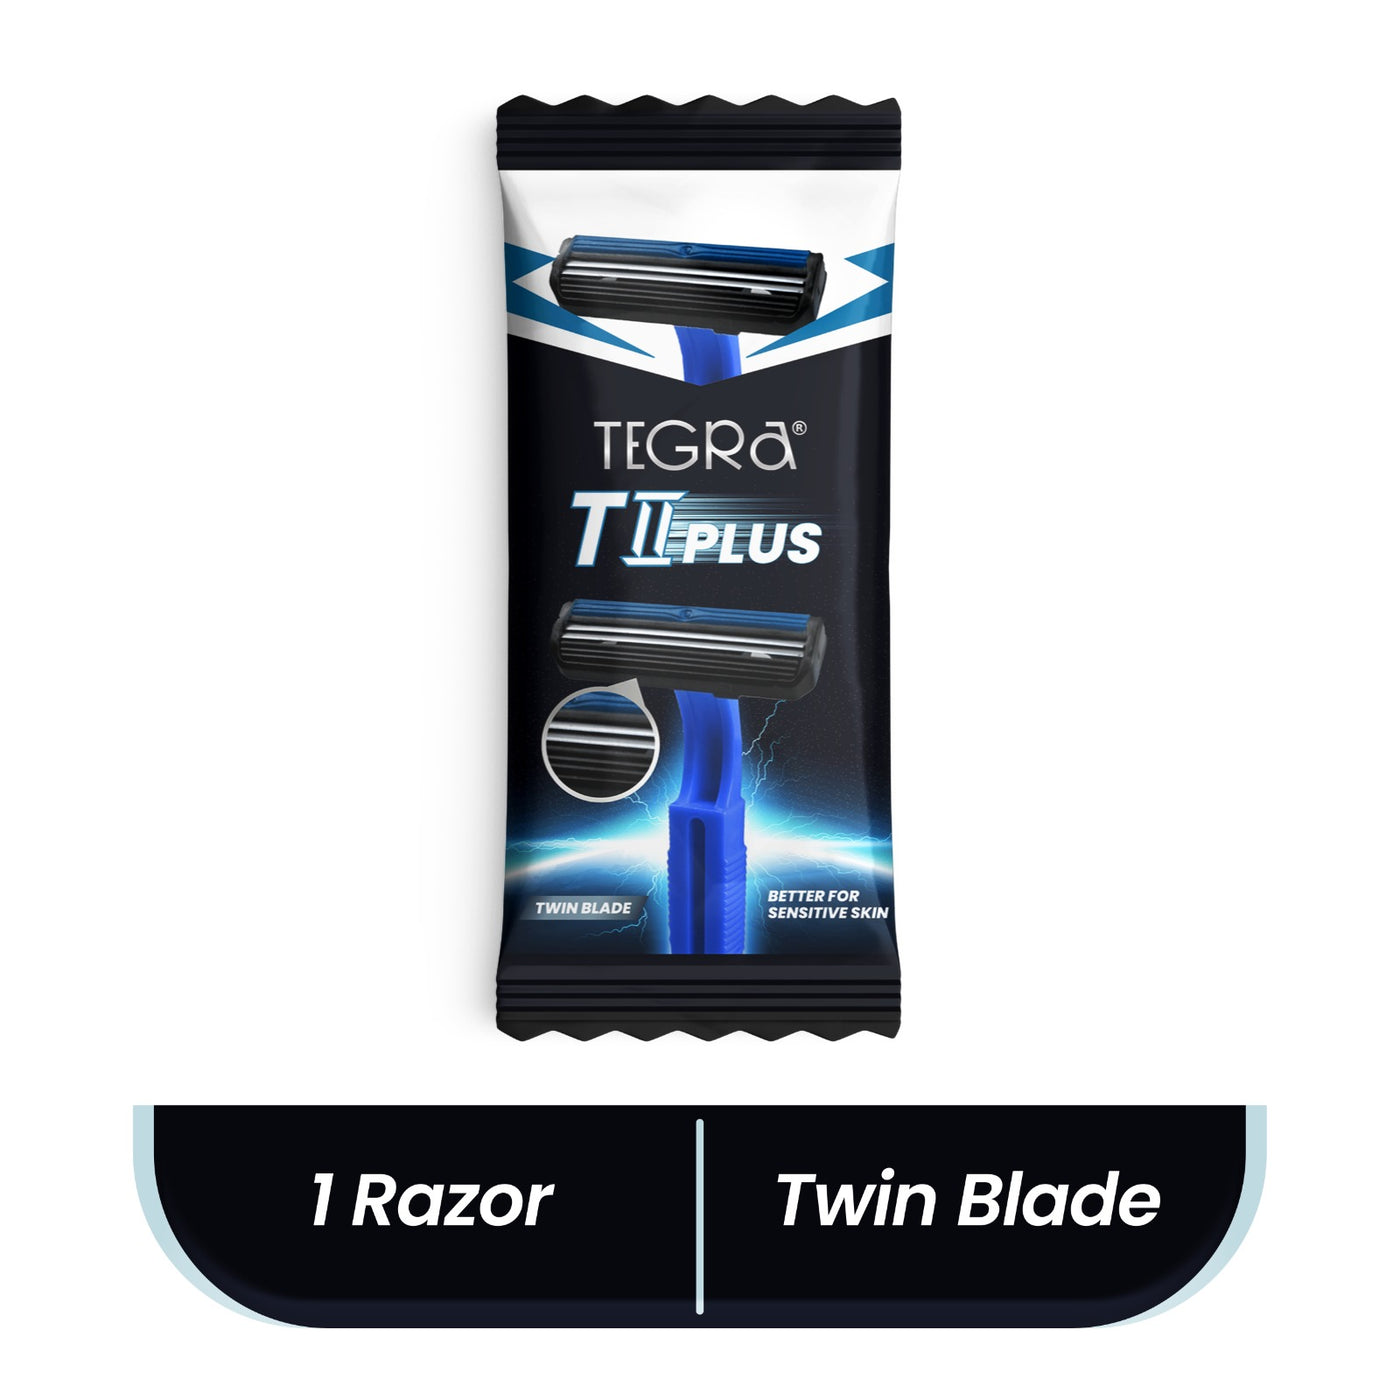 Tegra T2 Plus Twin Blade Body Razor